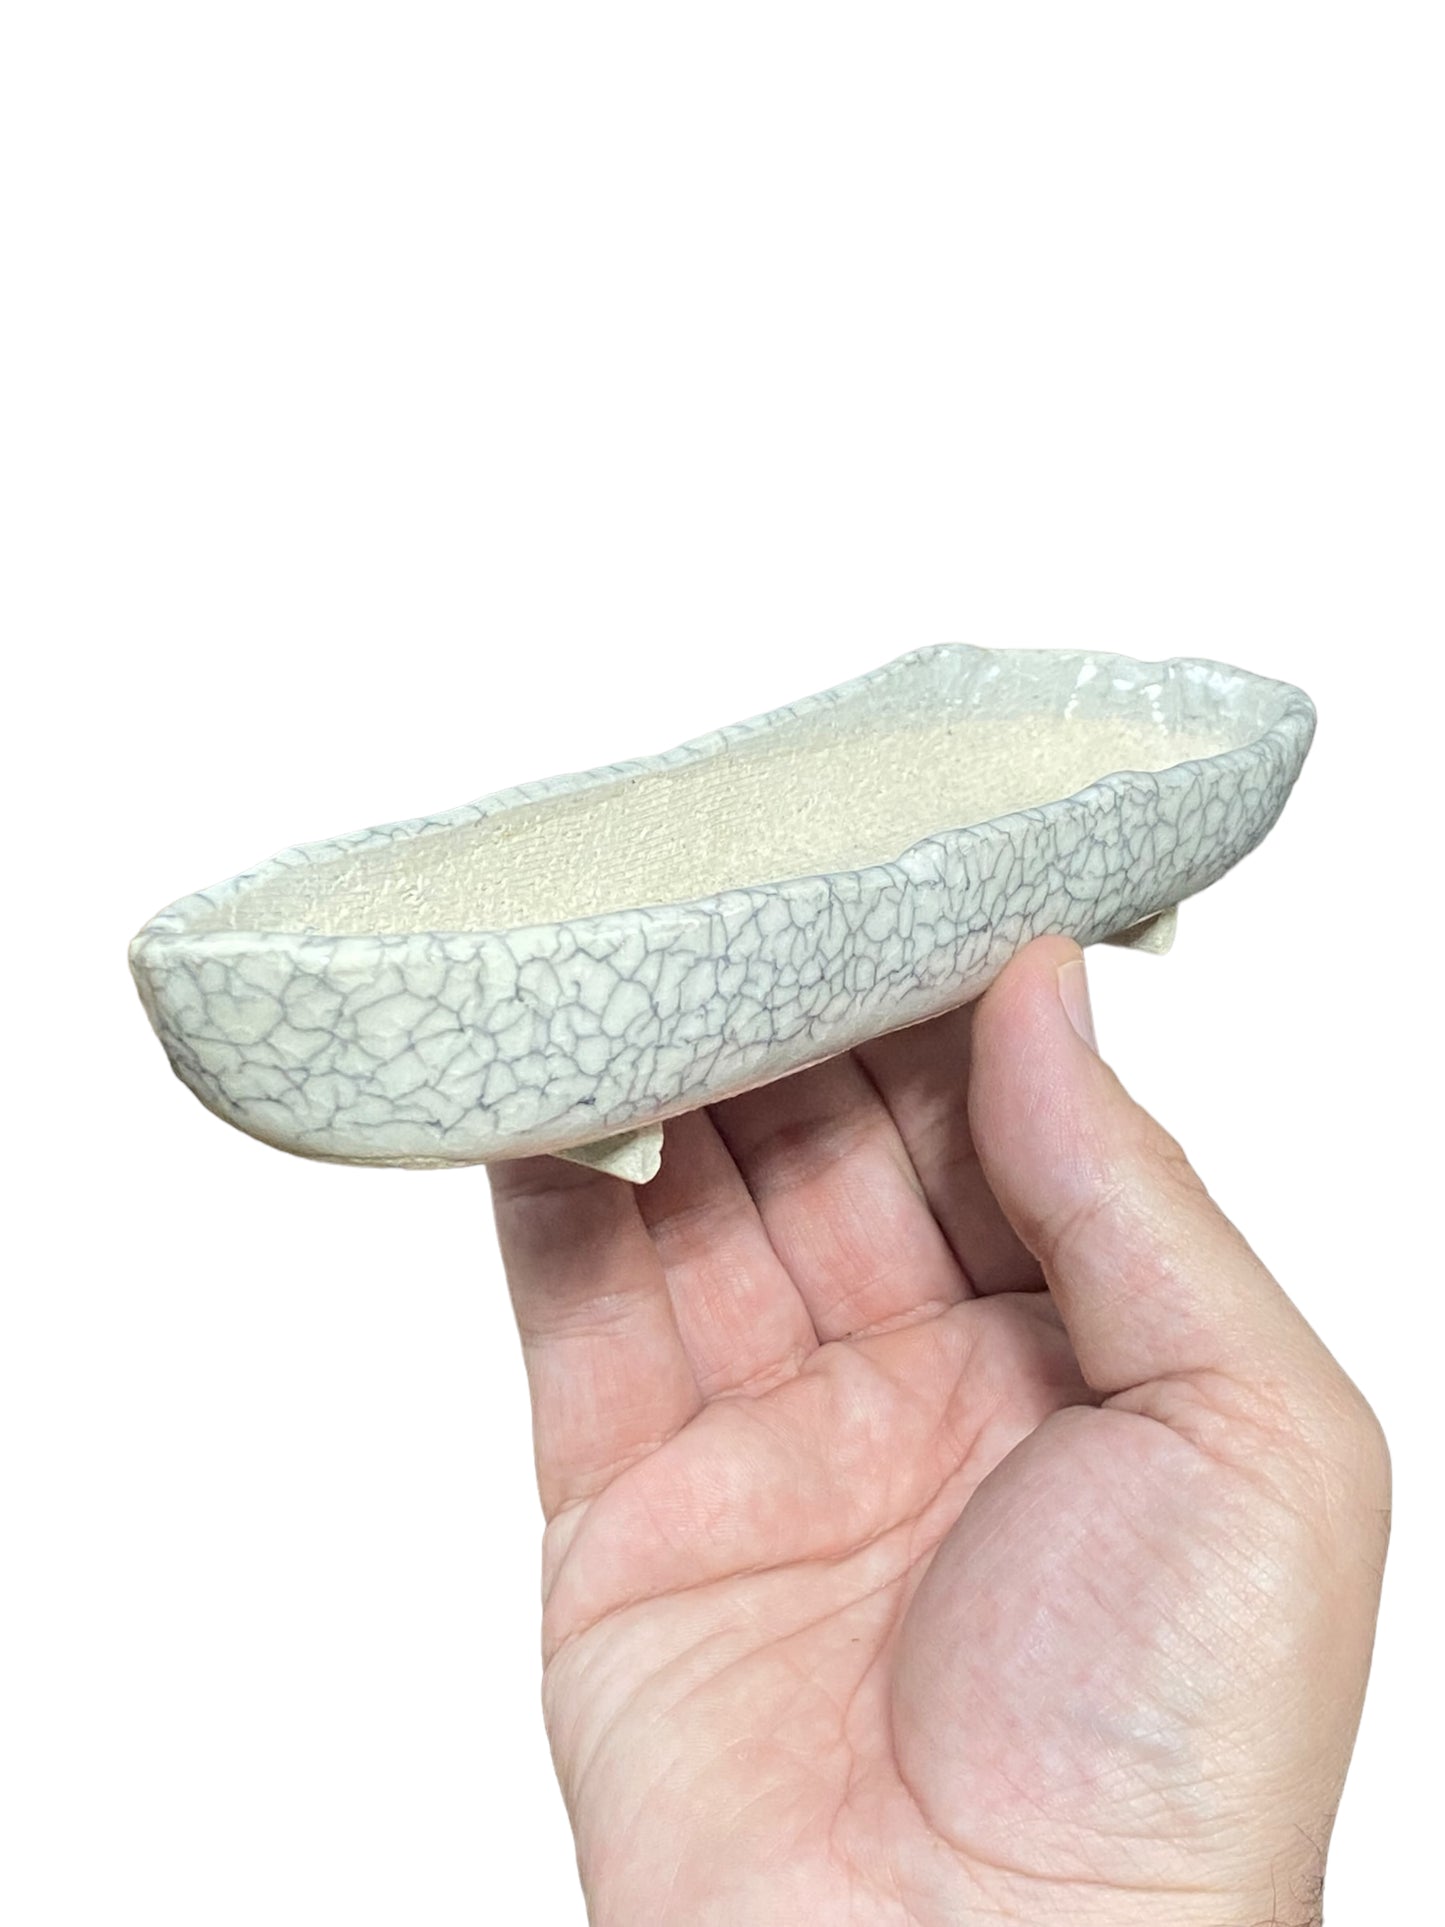 Shibakatsu - White Crackle Glazed Oval Style Bonsai Pot